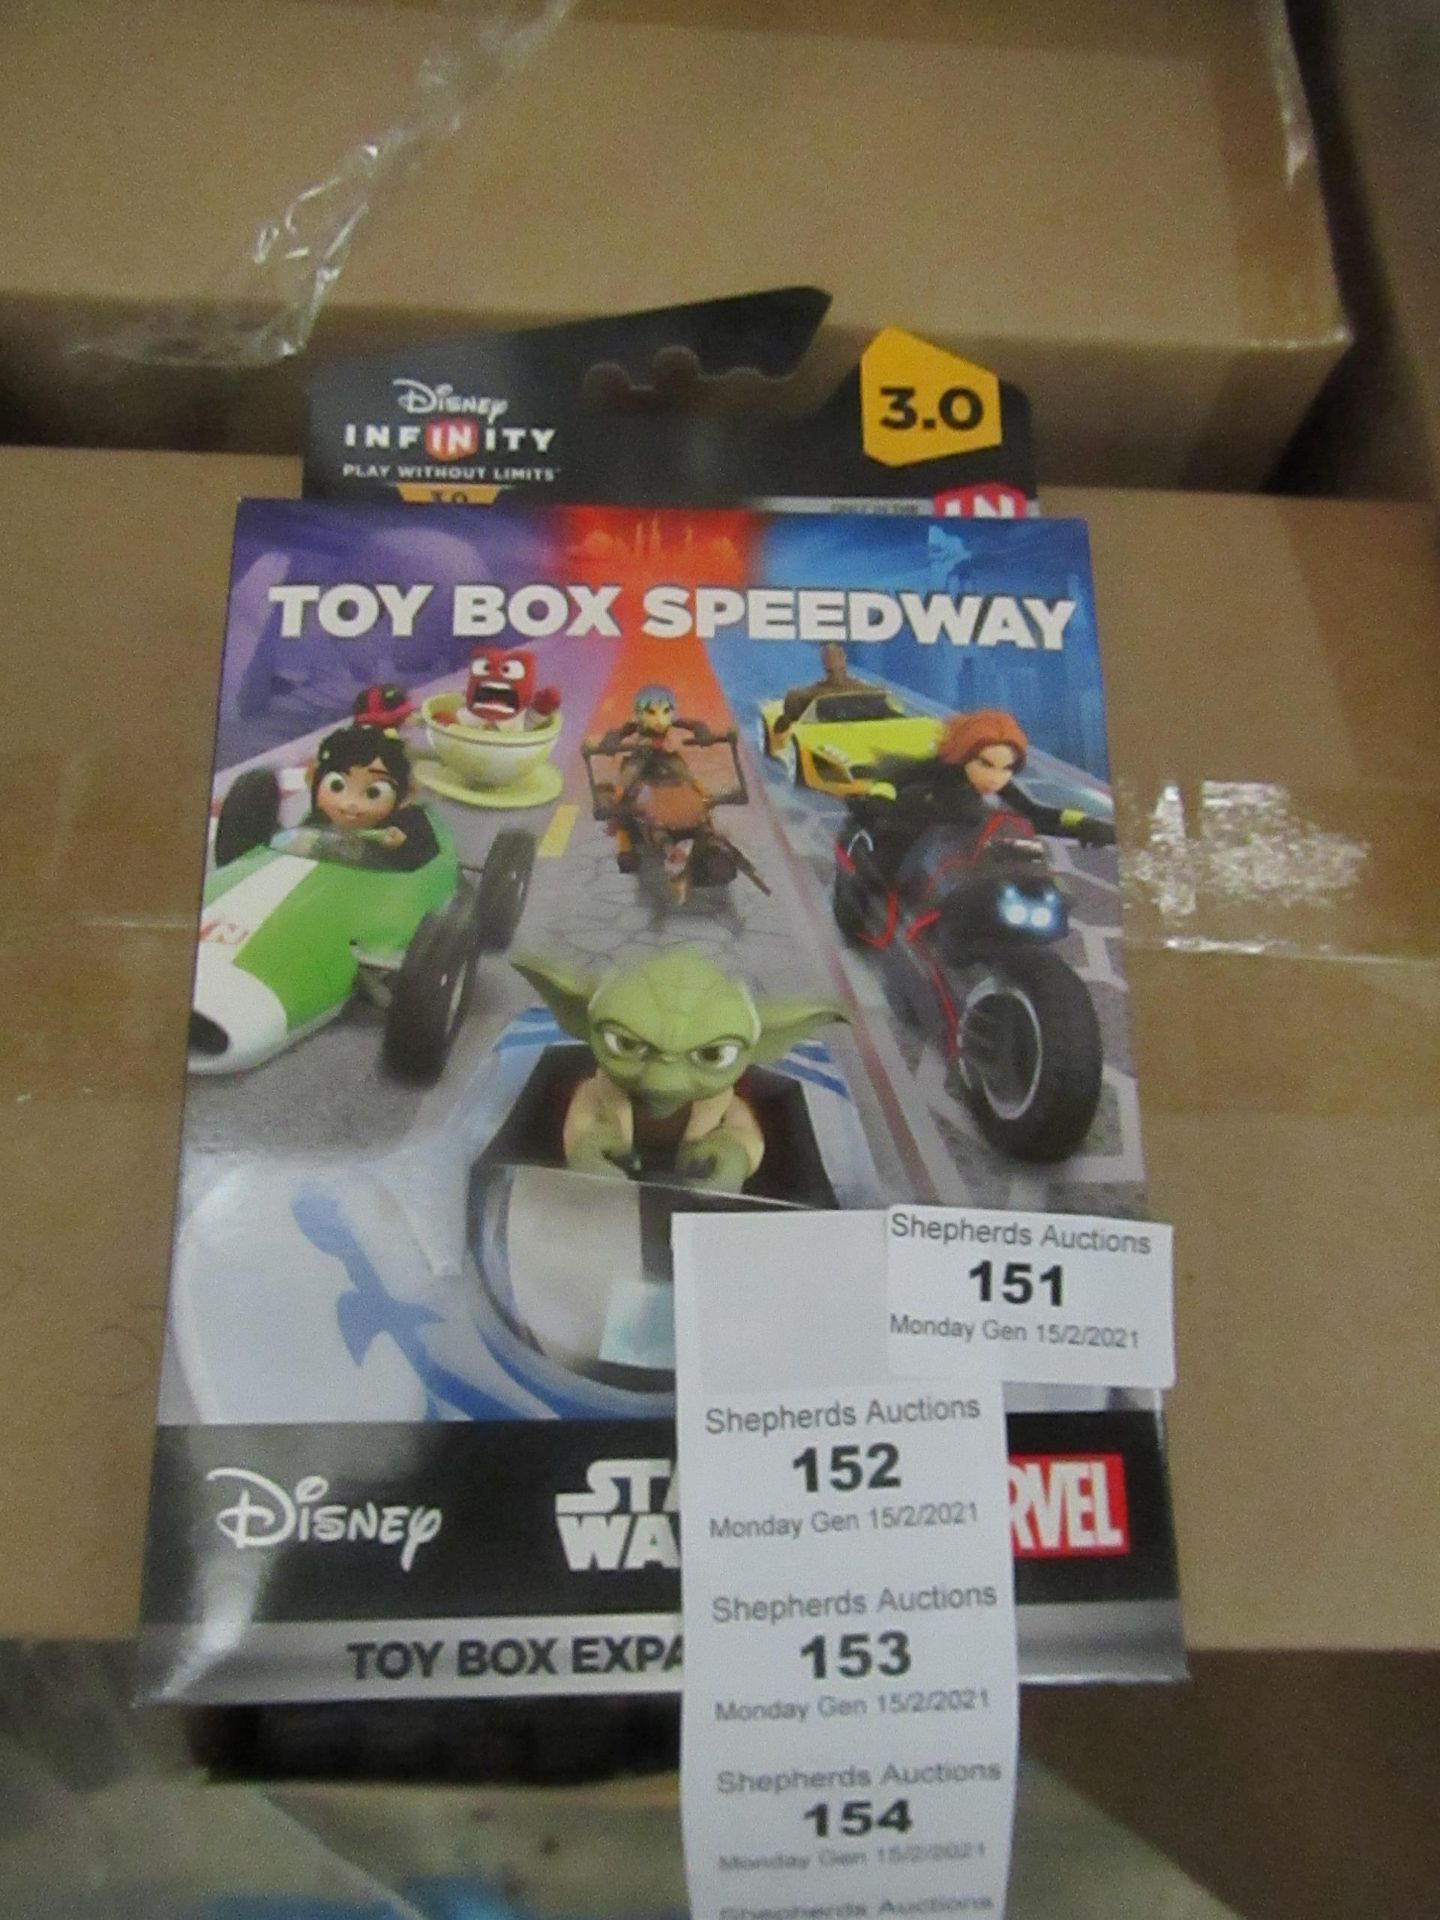 6x Disney Infinity - Toy Box Speedway Expansion Game (Marvel/Disney/Starwars) - New & Boxed.